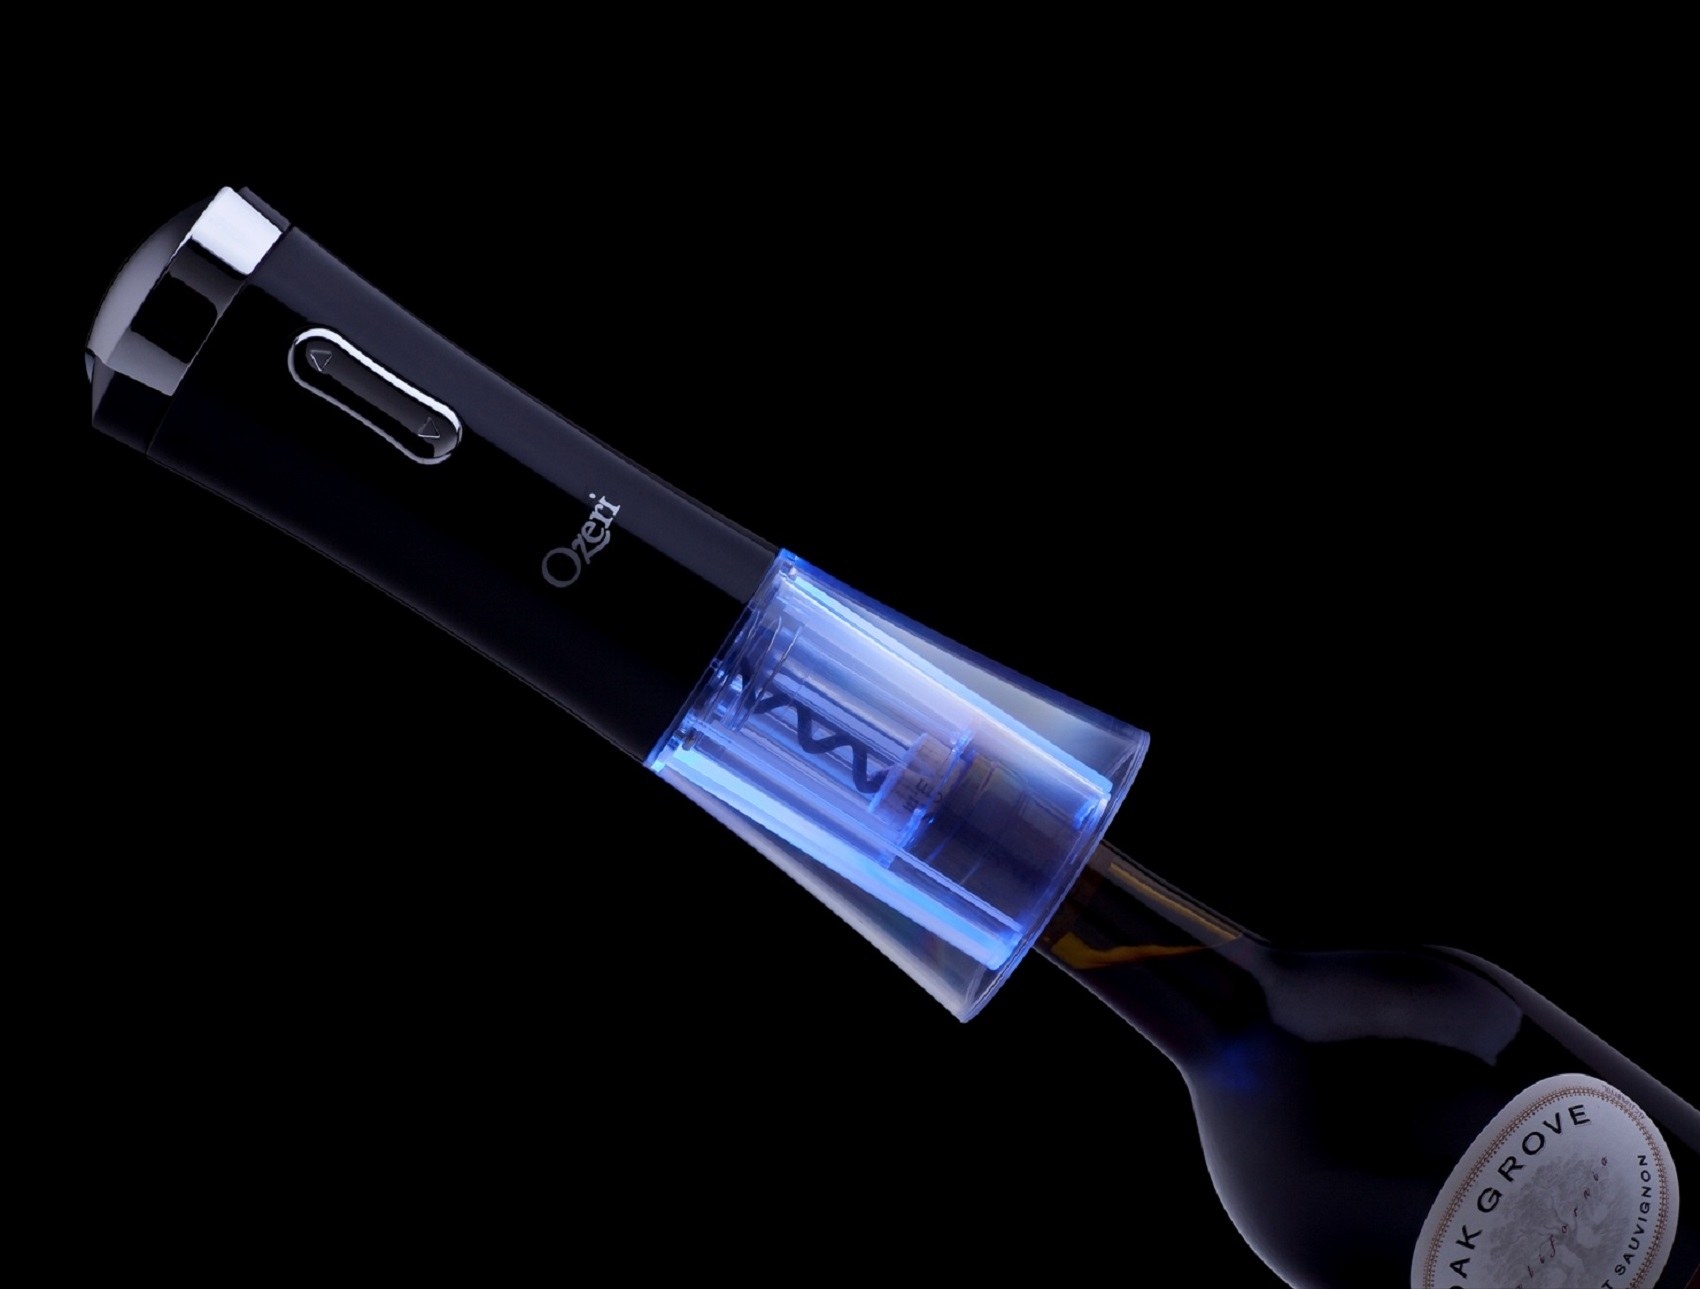 The LED light-up wine opener 